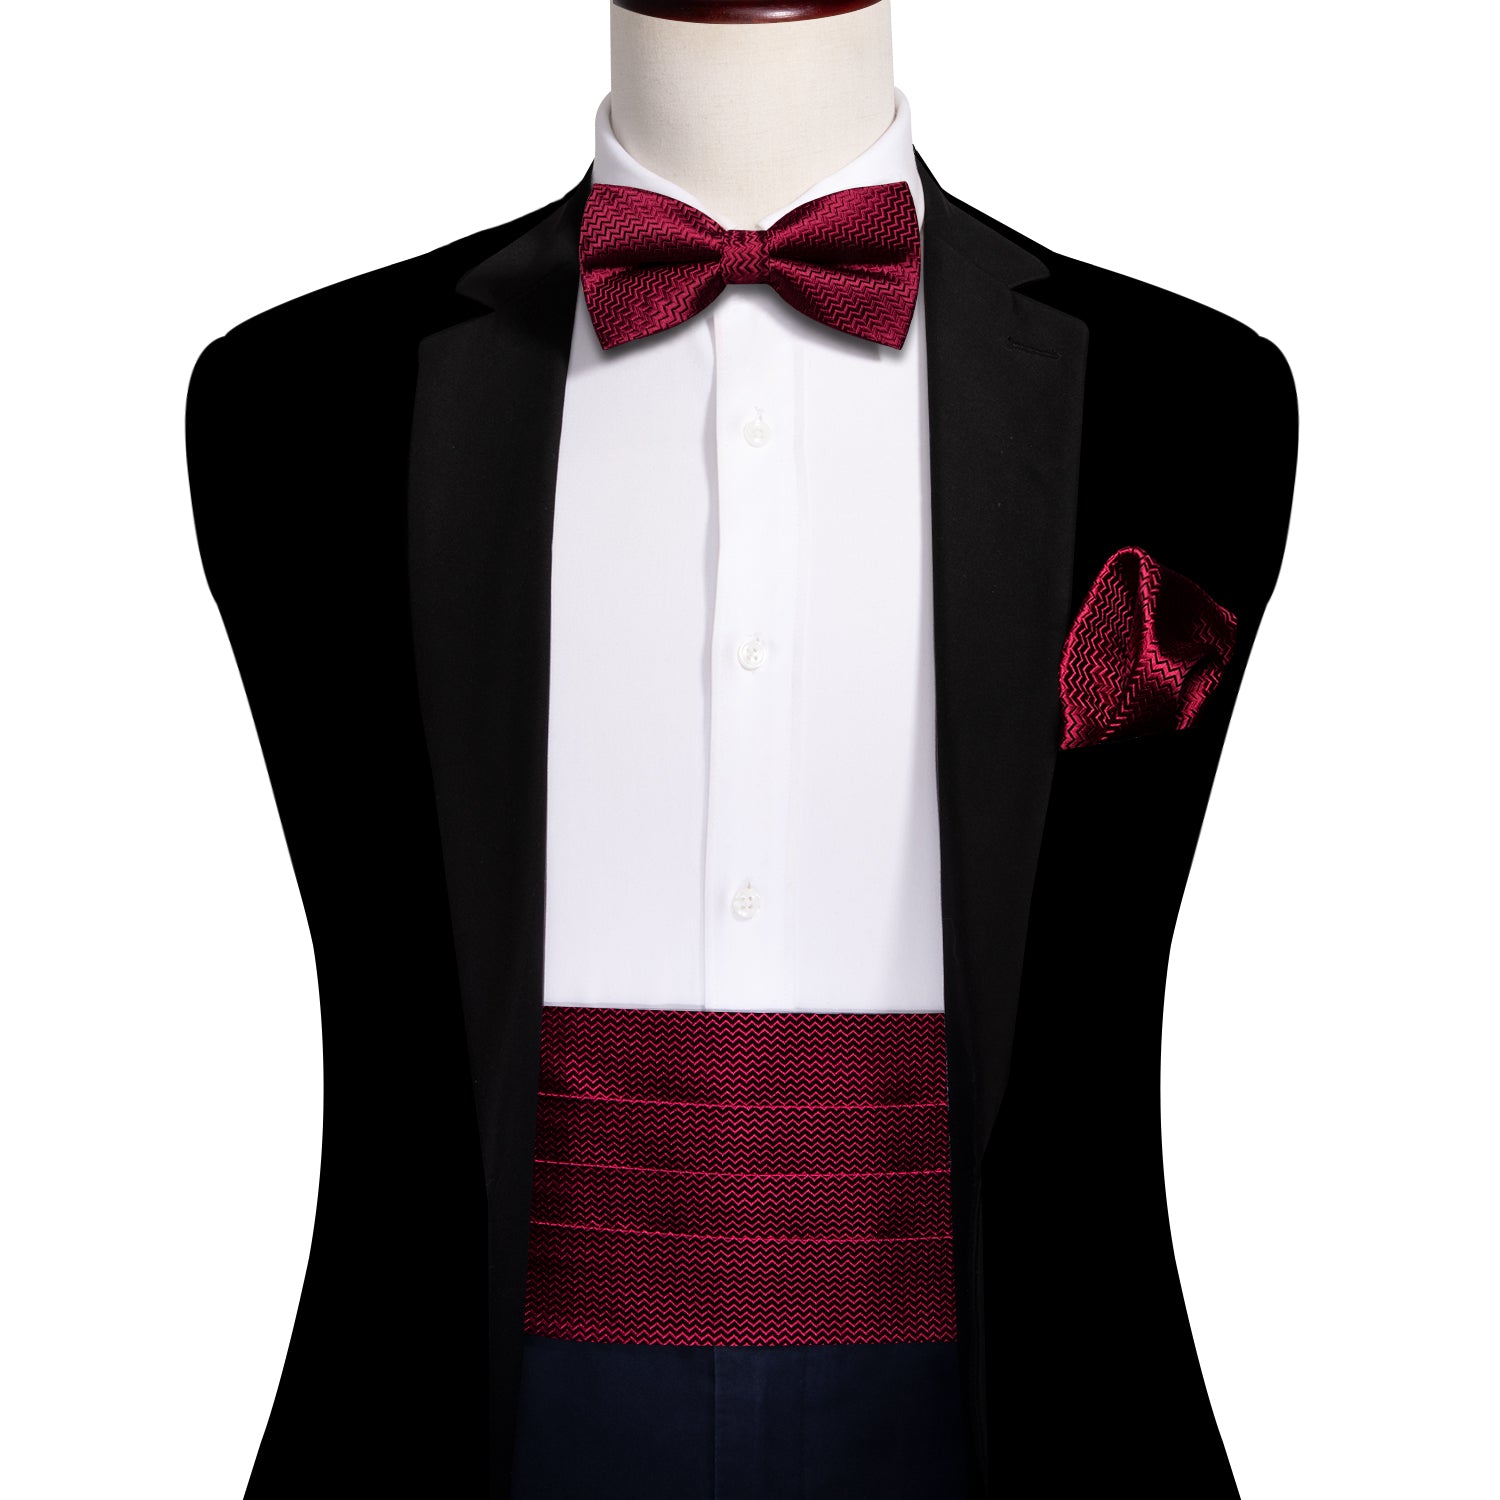 Barry.wang Red Bow Tie Solid Cummerbund Bow tie Handkerchief Cufflinks Set for Men